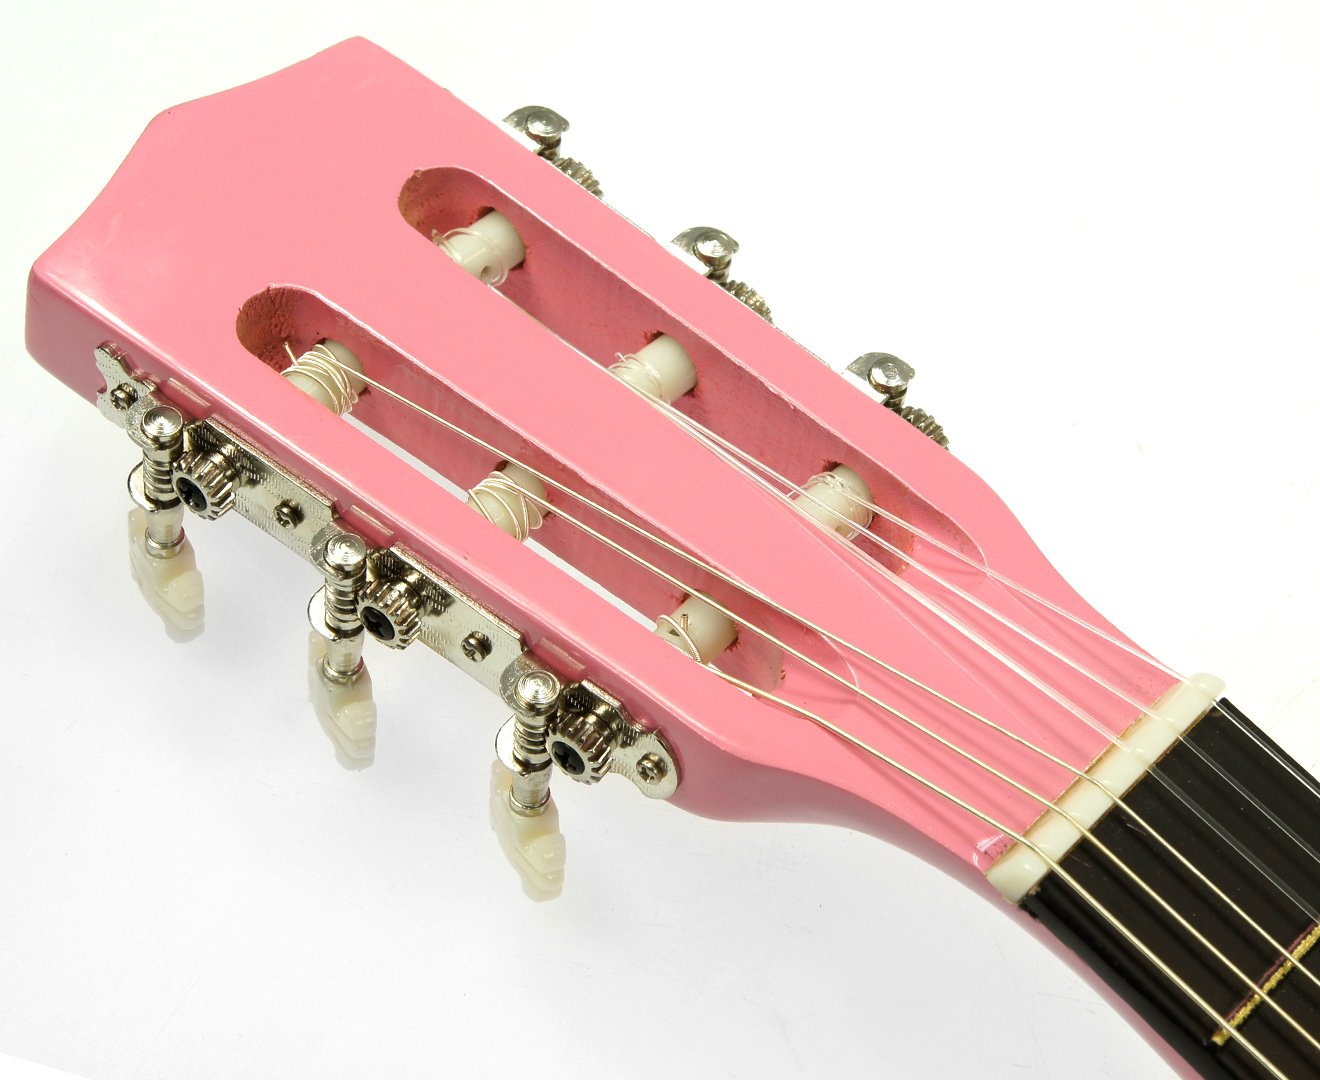 Childrens Guitar Karrera 34in Acoustic Wooden - Pink